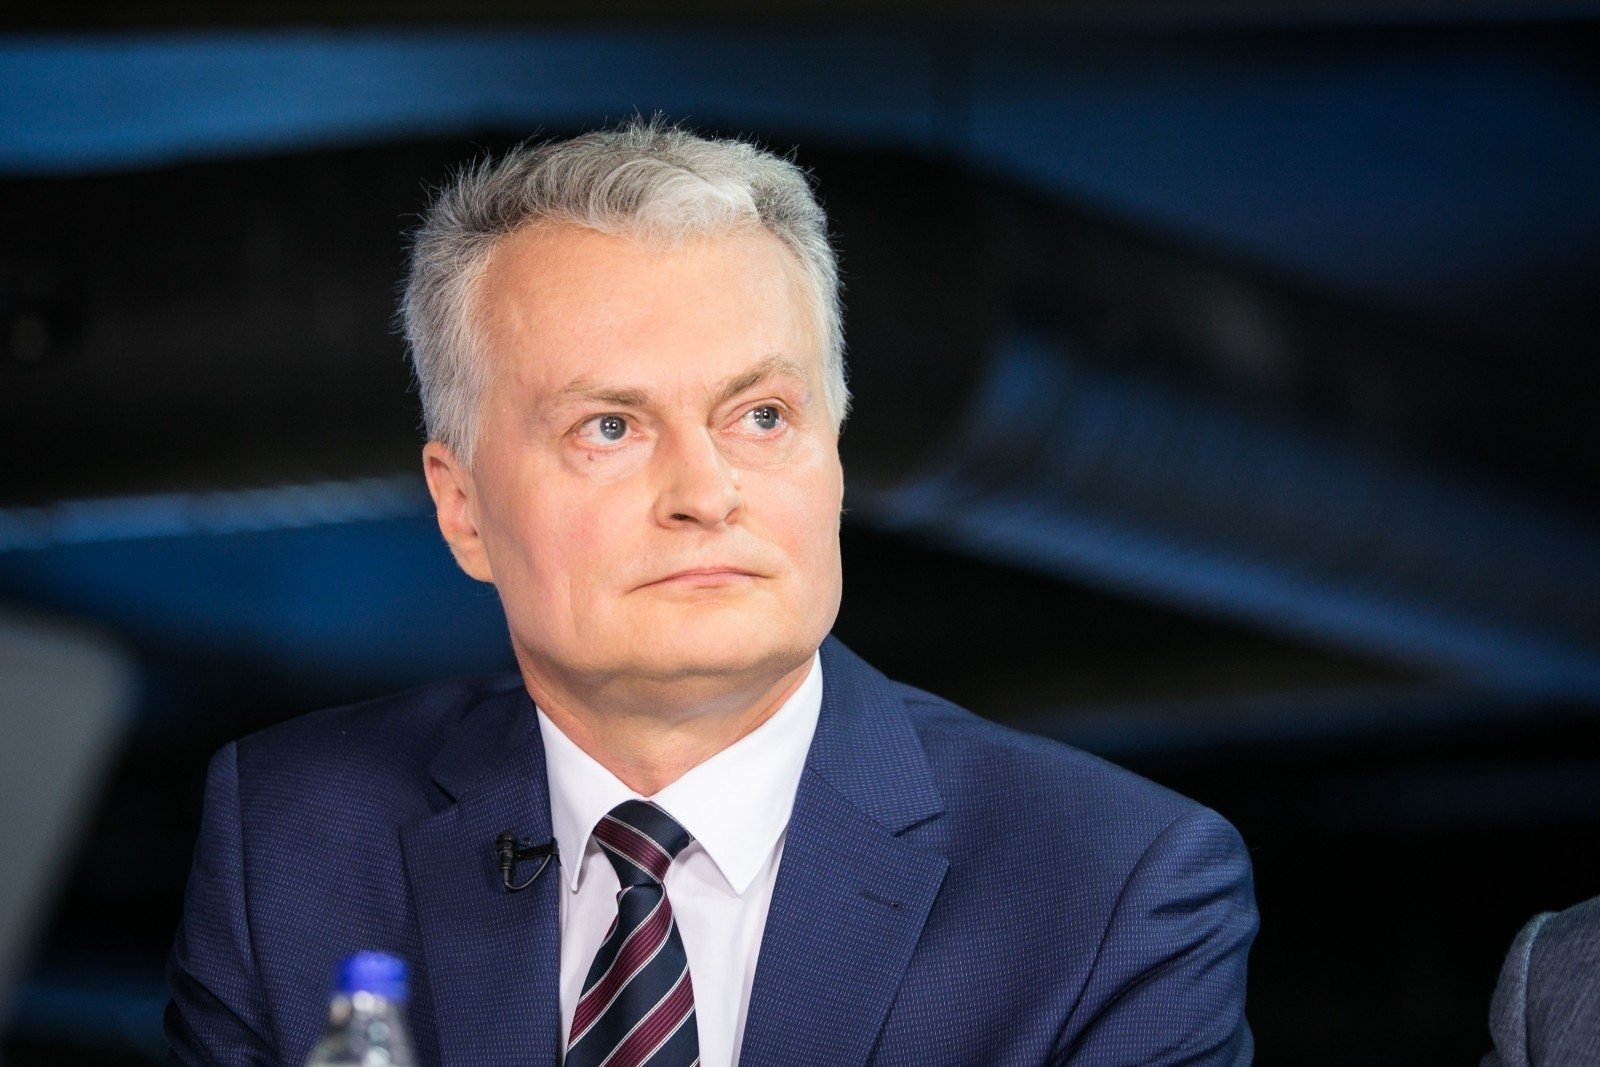 Economistul Gitanas Nauseda este noul preşedinte al Lituaniei